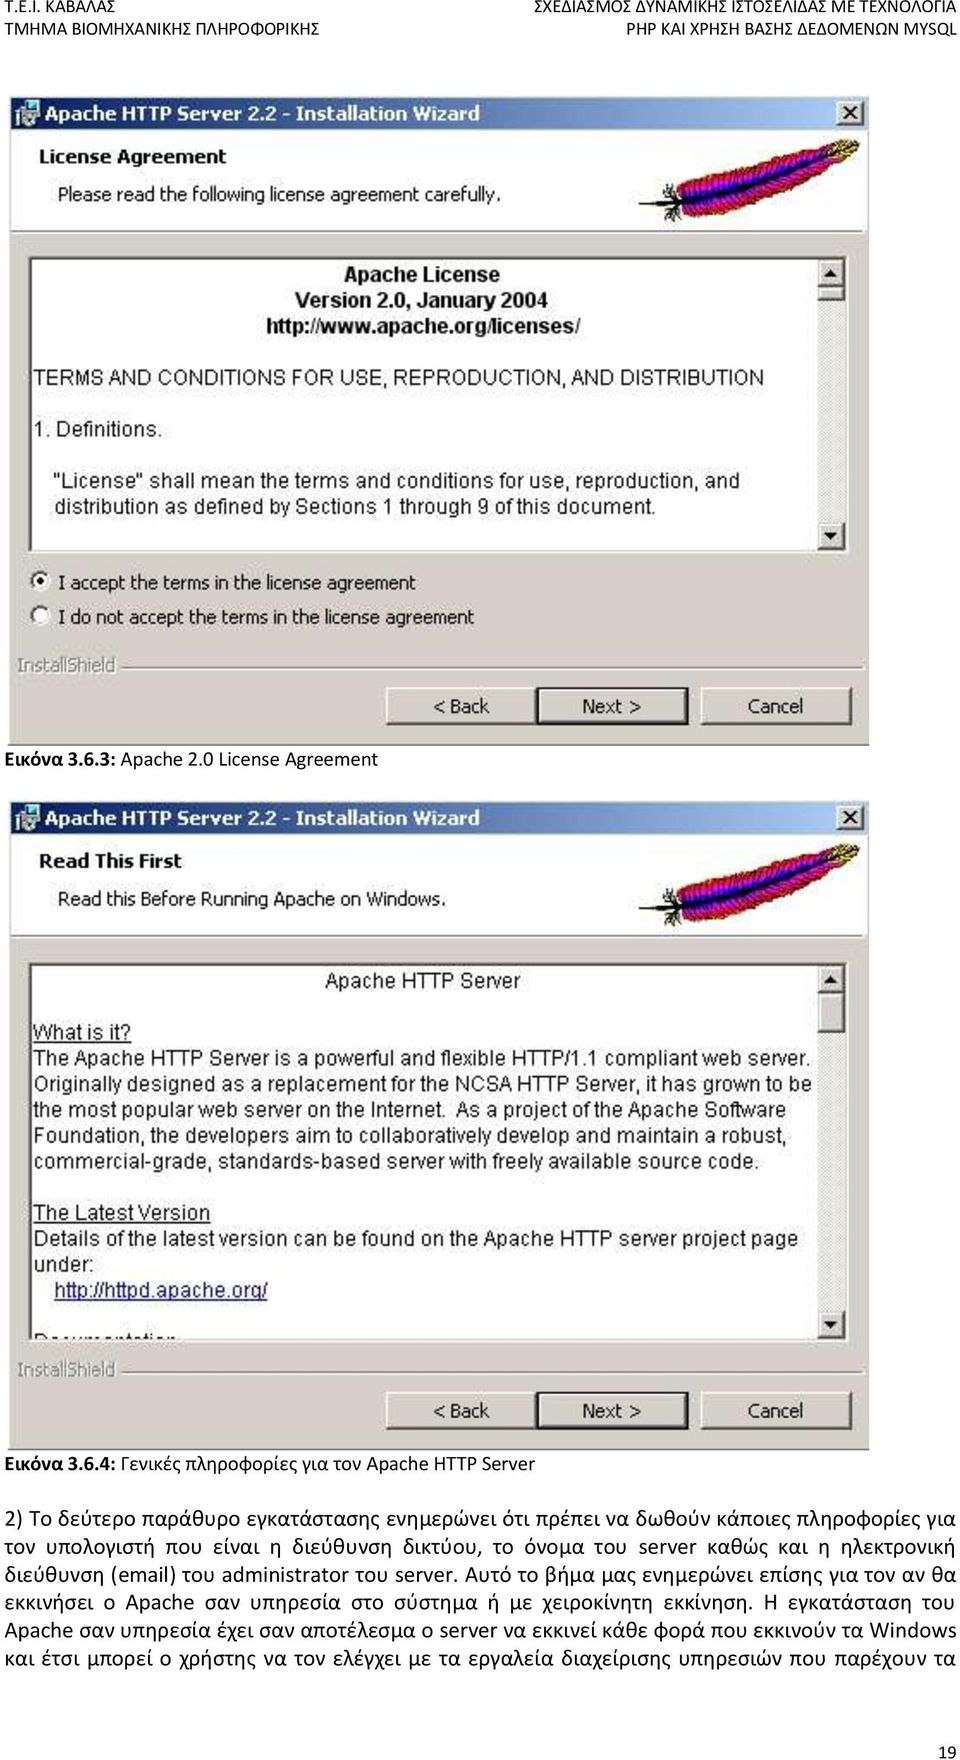 0 License Agreement 4: Γενικές πληροφορίες για τον Apache HTTP Server 2) Το δεύτερο παράθυρο εγκατάστασης ενημερώνει ότι πρέπει να δωθούν κάποιες πληροφορίες για τον